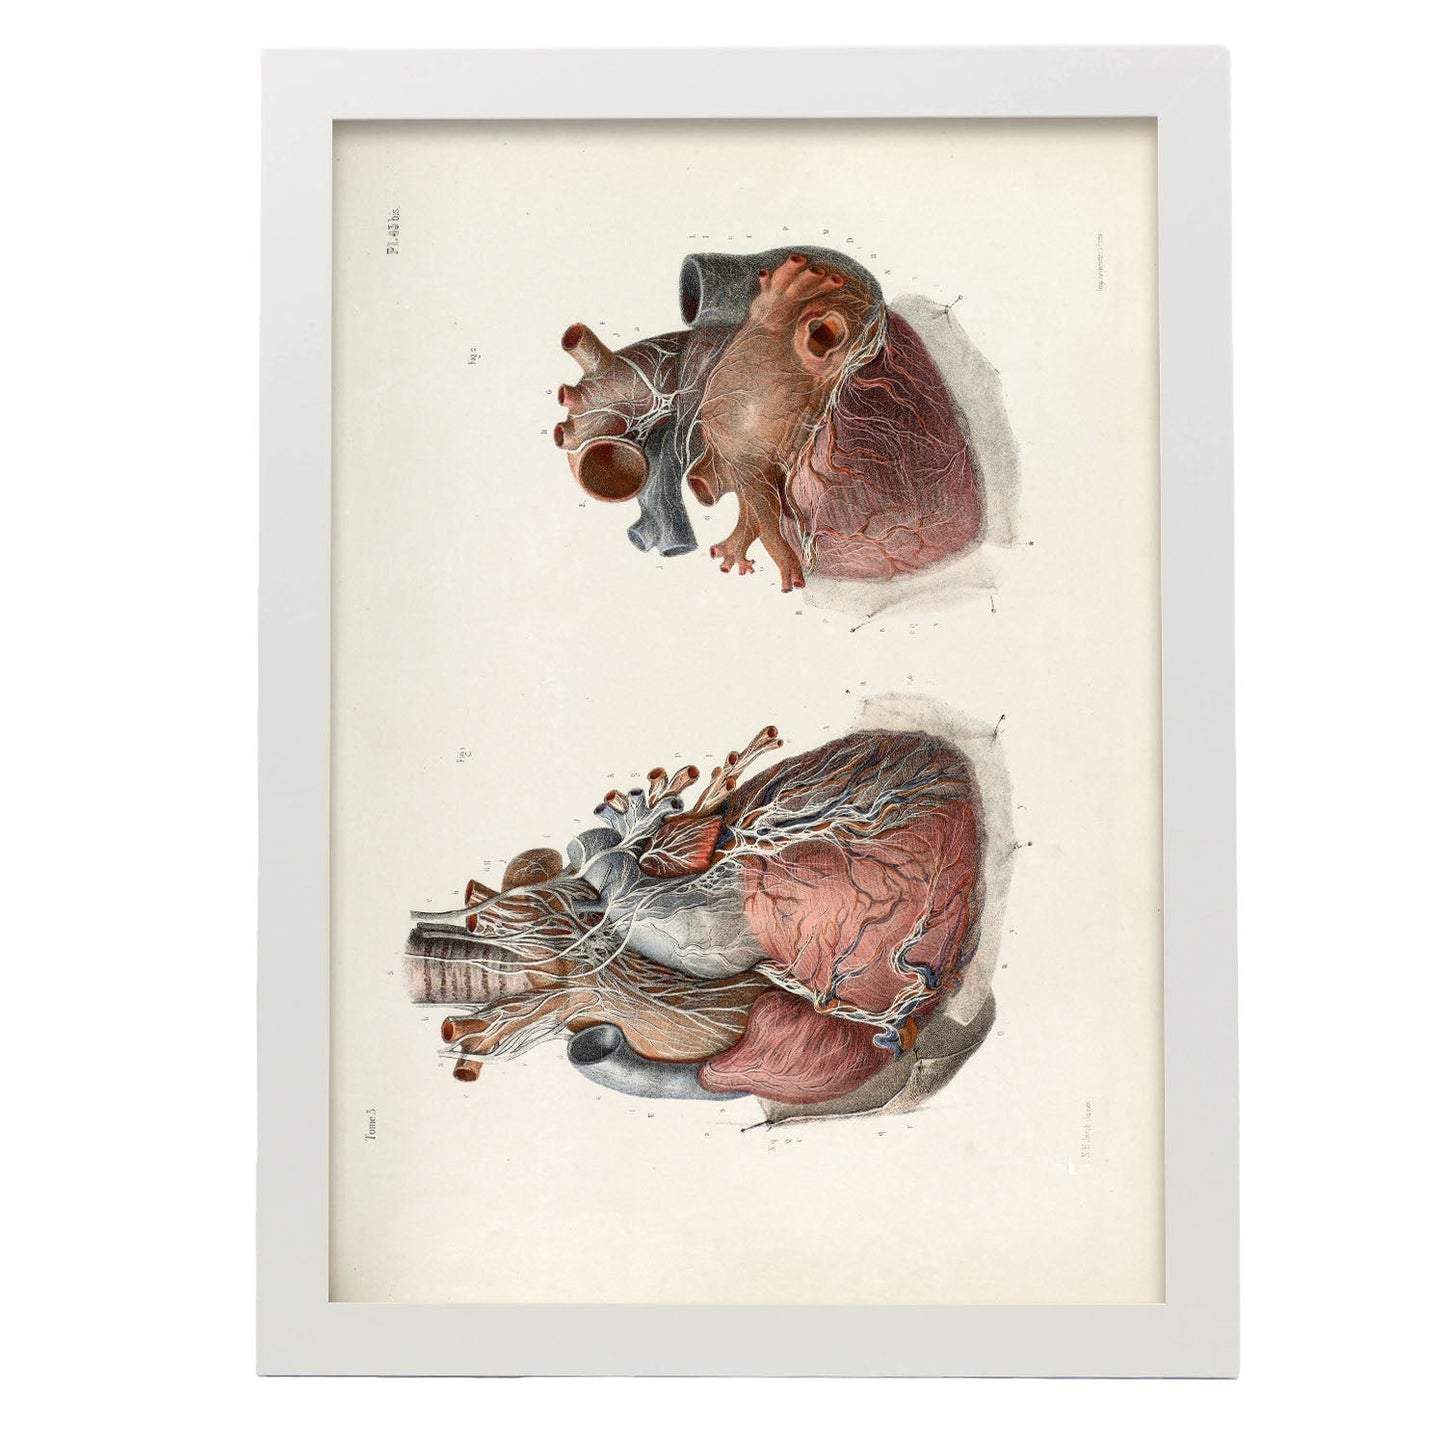 Heart and vagus nerve-Artwork-Nacnic-A3-Marco Blanco-Nacnic Estudio SL